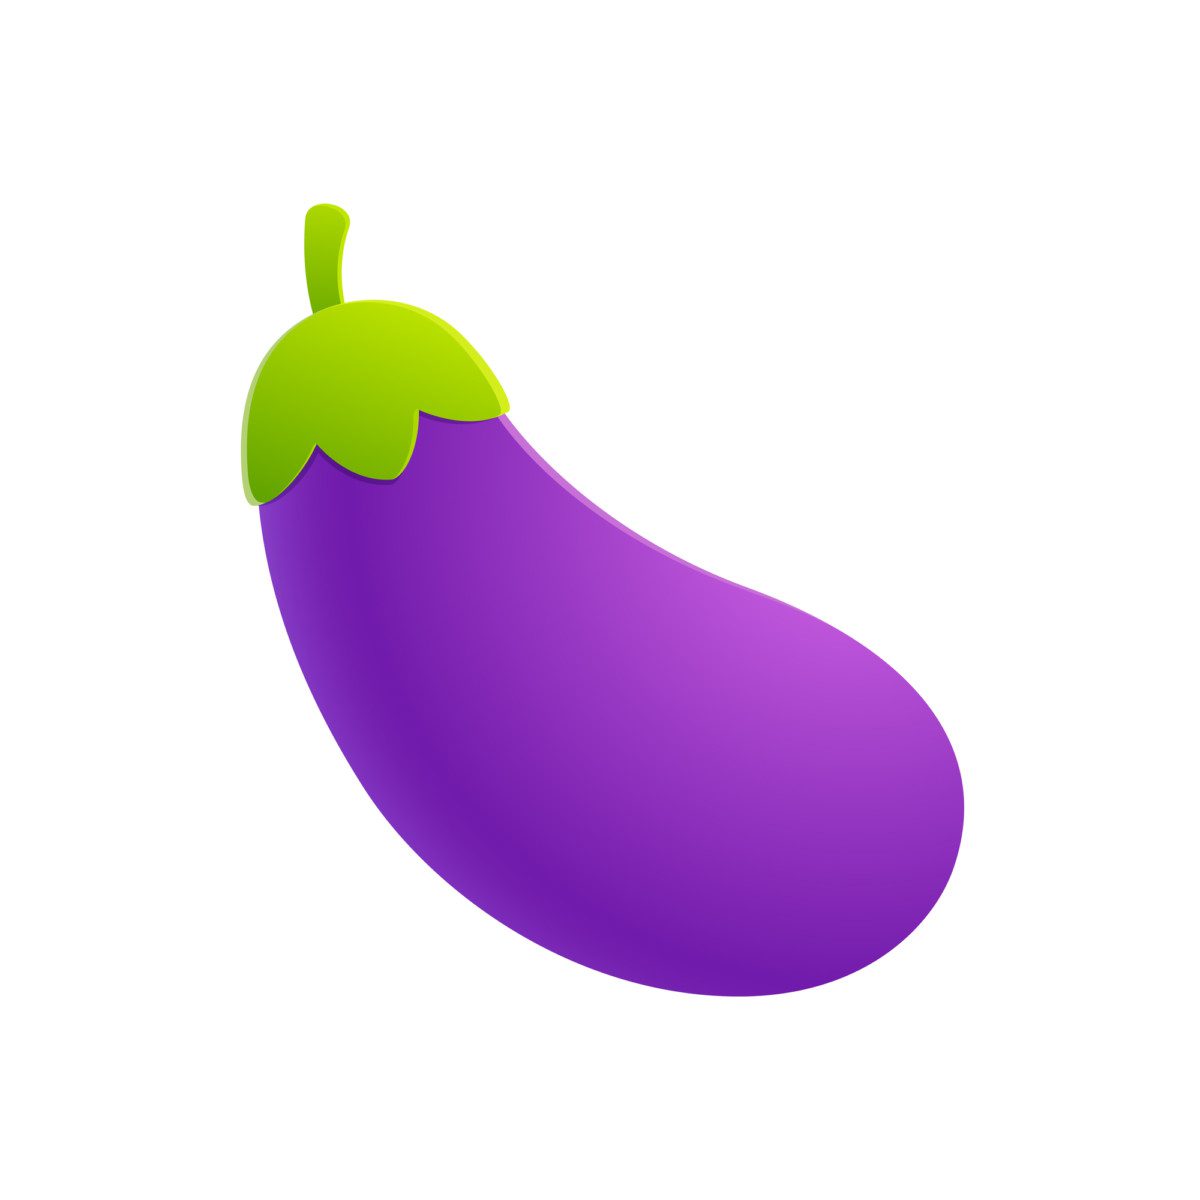 kh pp eggplant emoji deposit photo June 2019